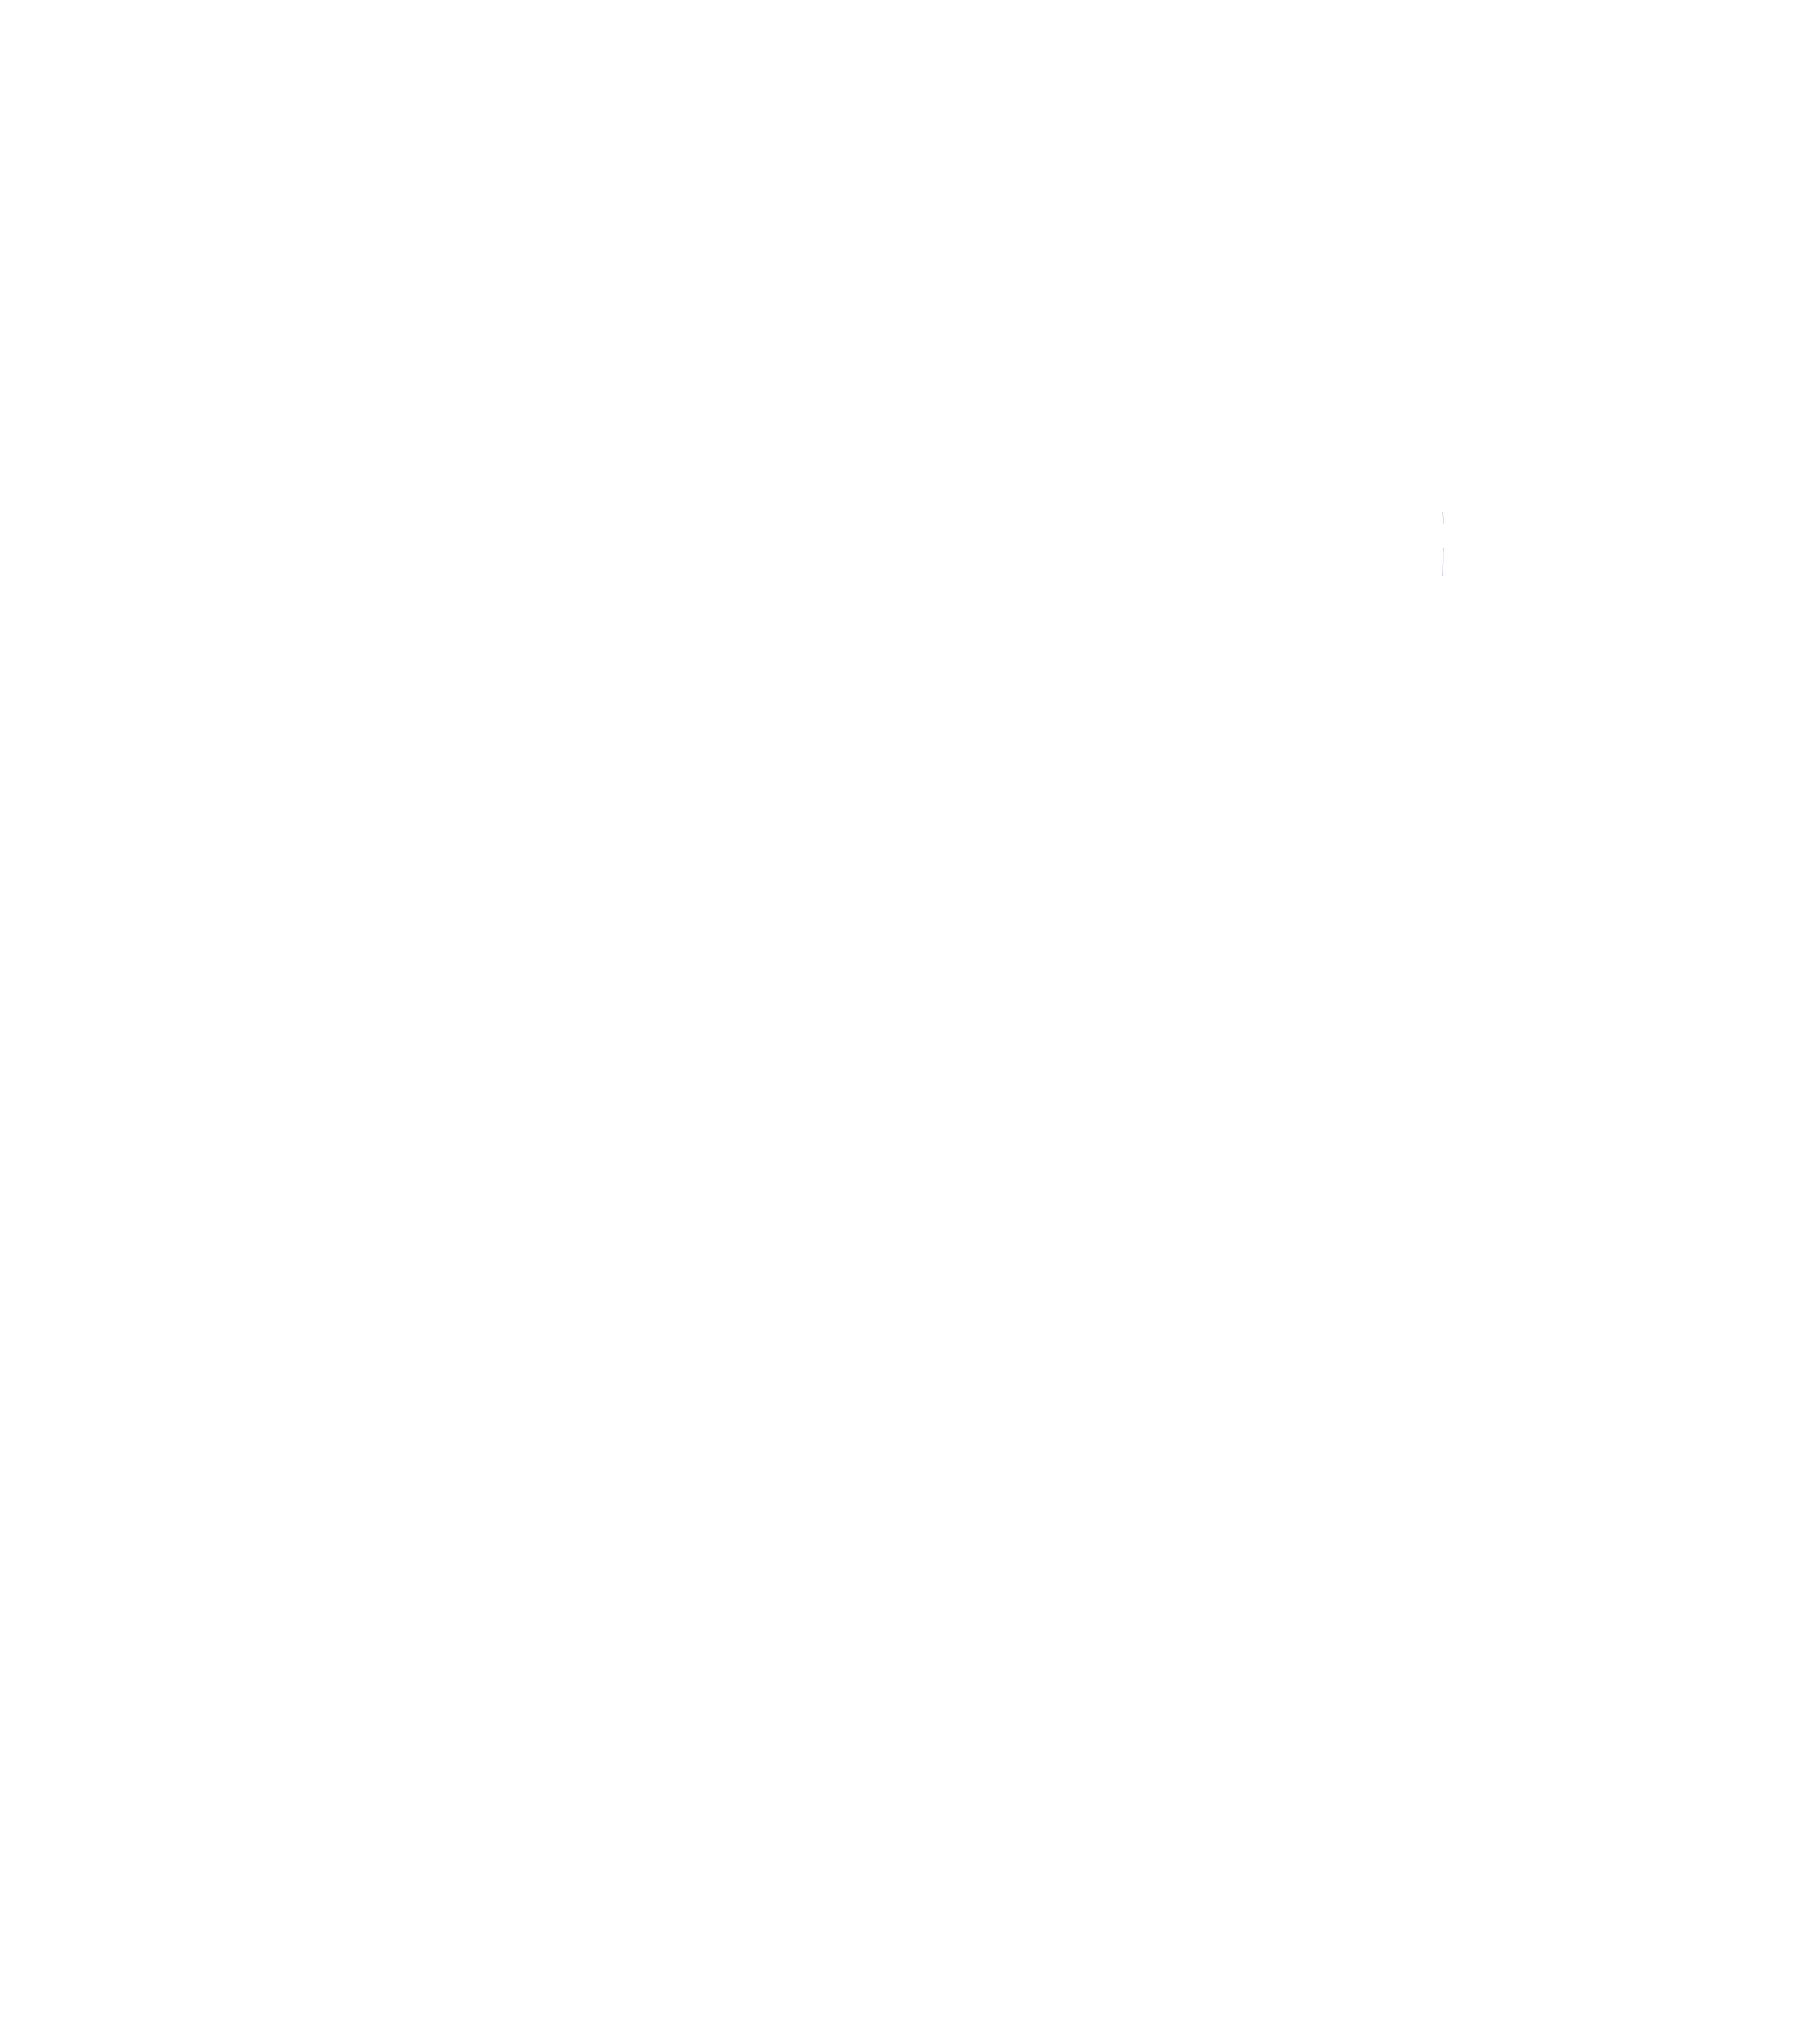 Kankakee Podcast